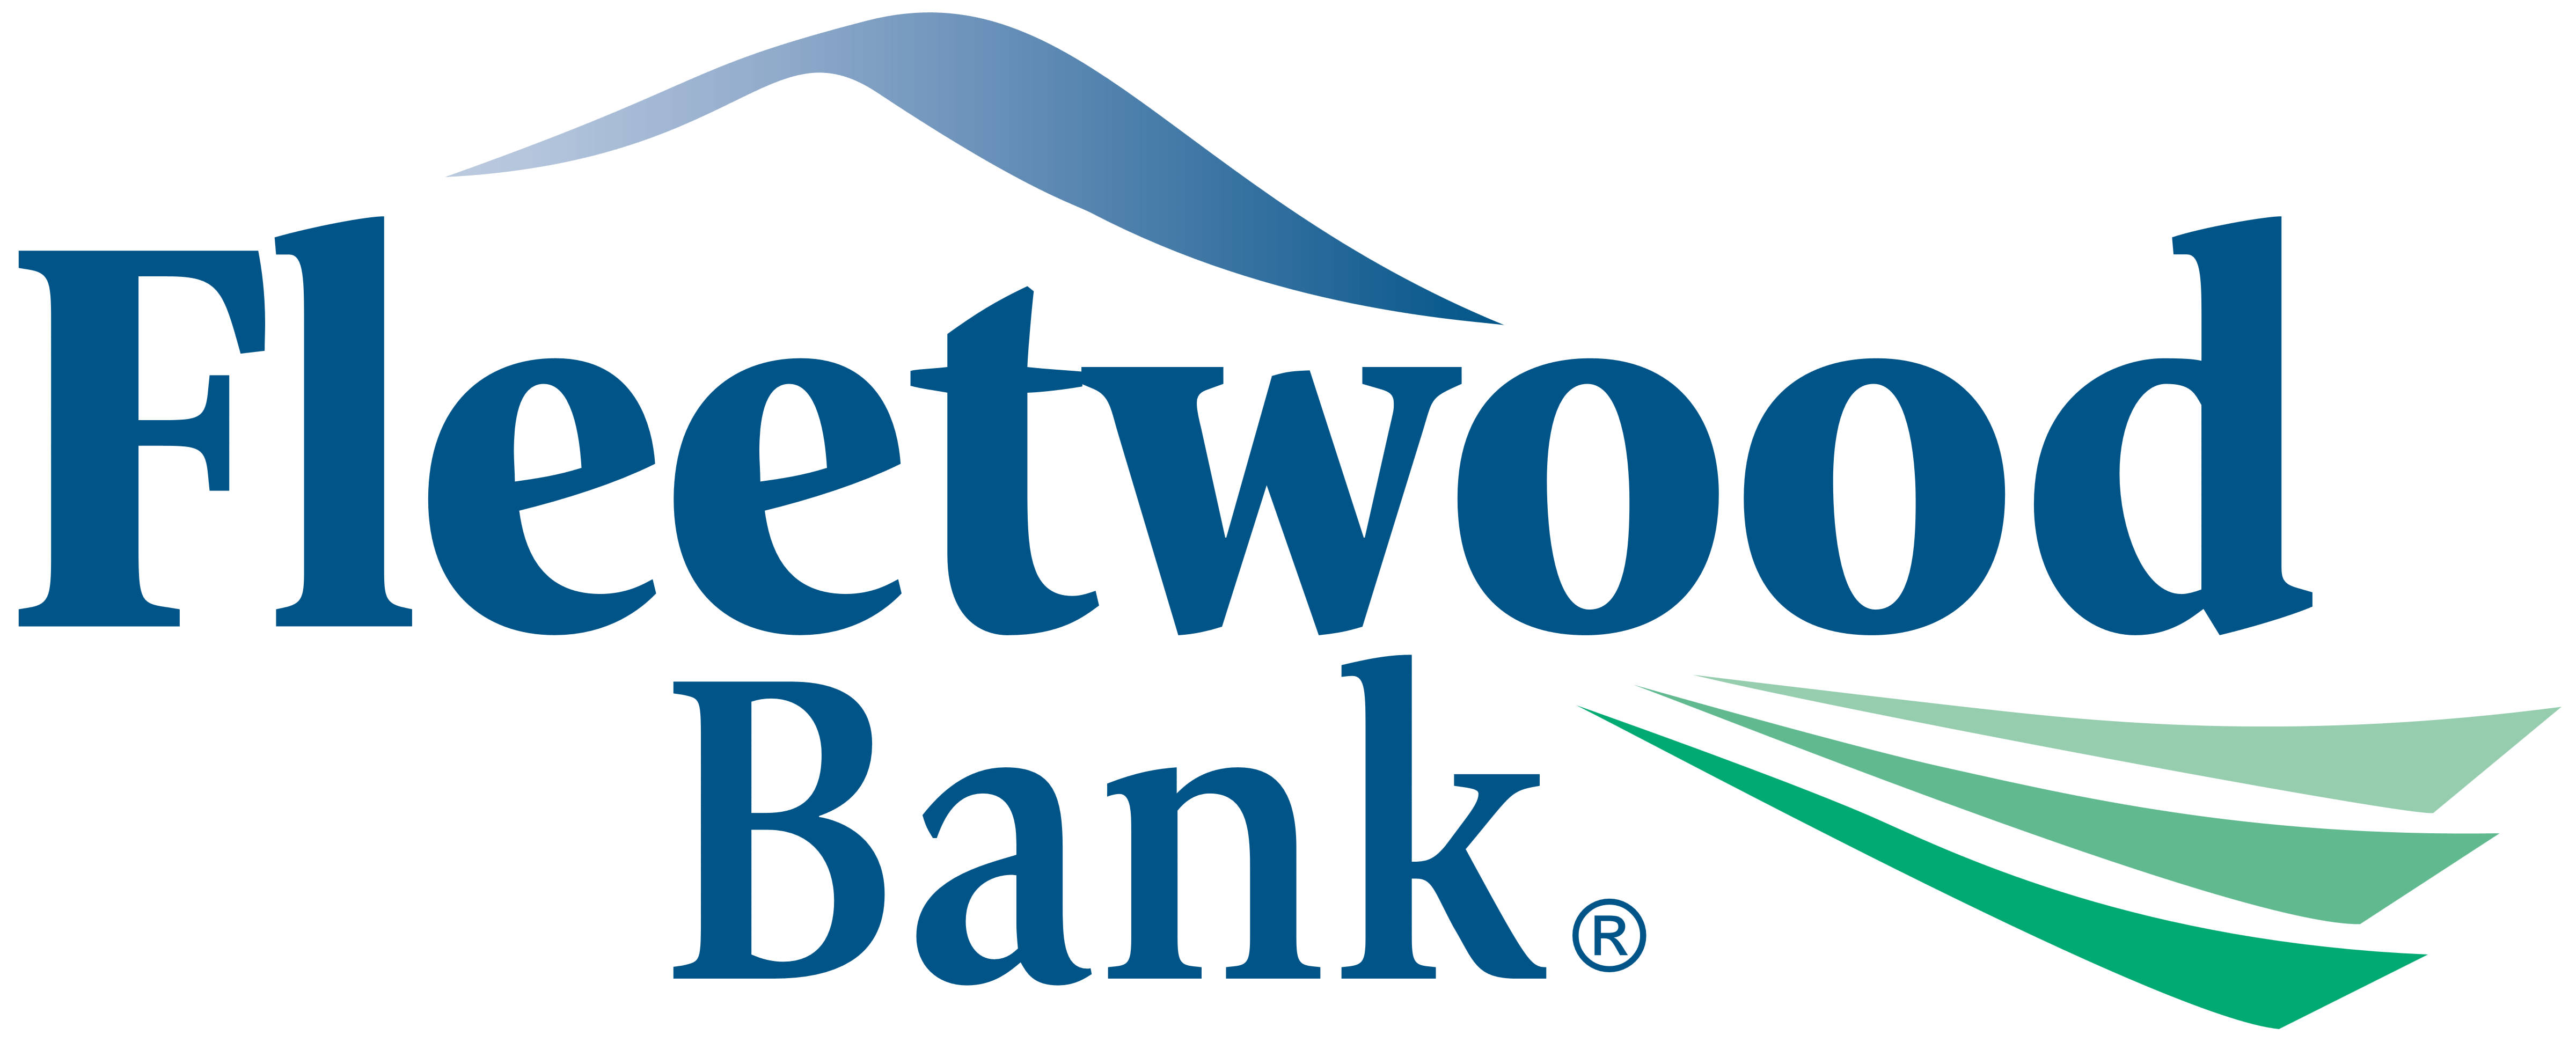 Fleetwood Logo - Fleetwood Bank – Logos Download